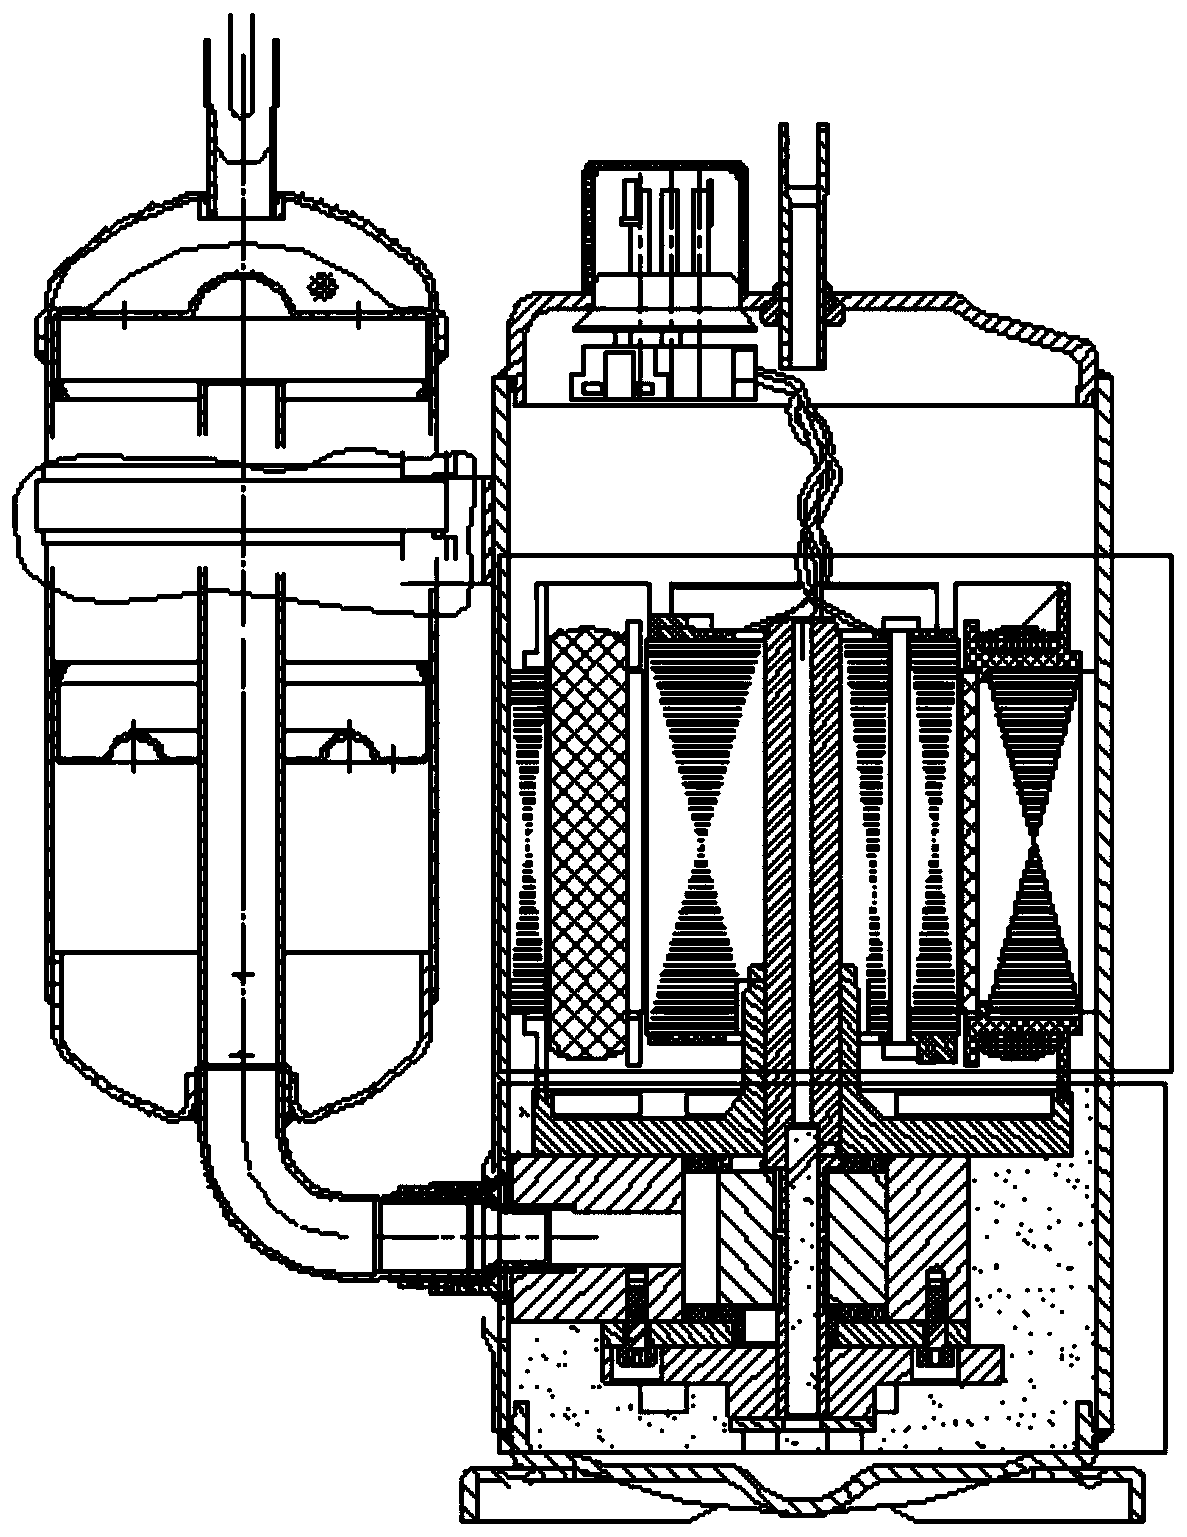 Compressor pump body and compressor